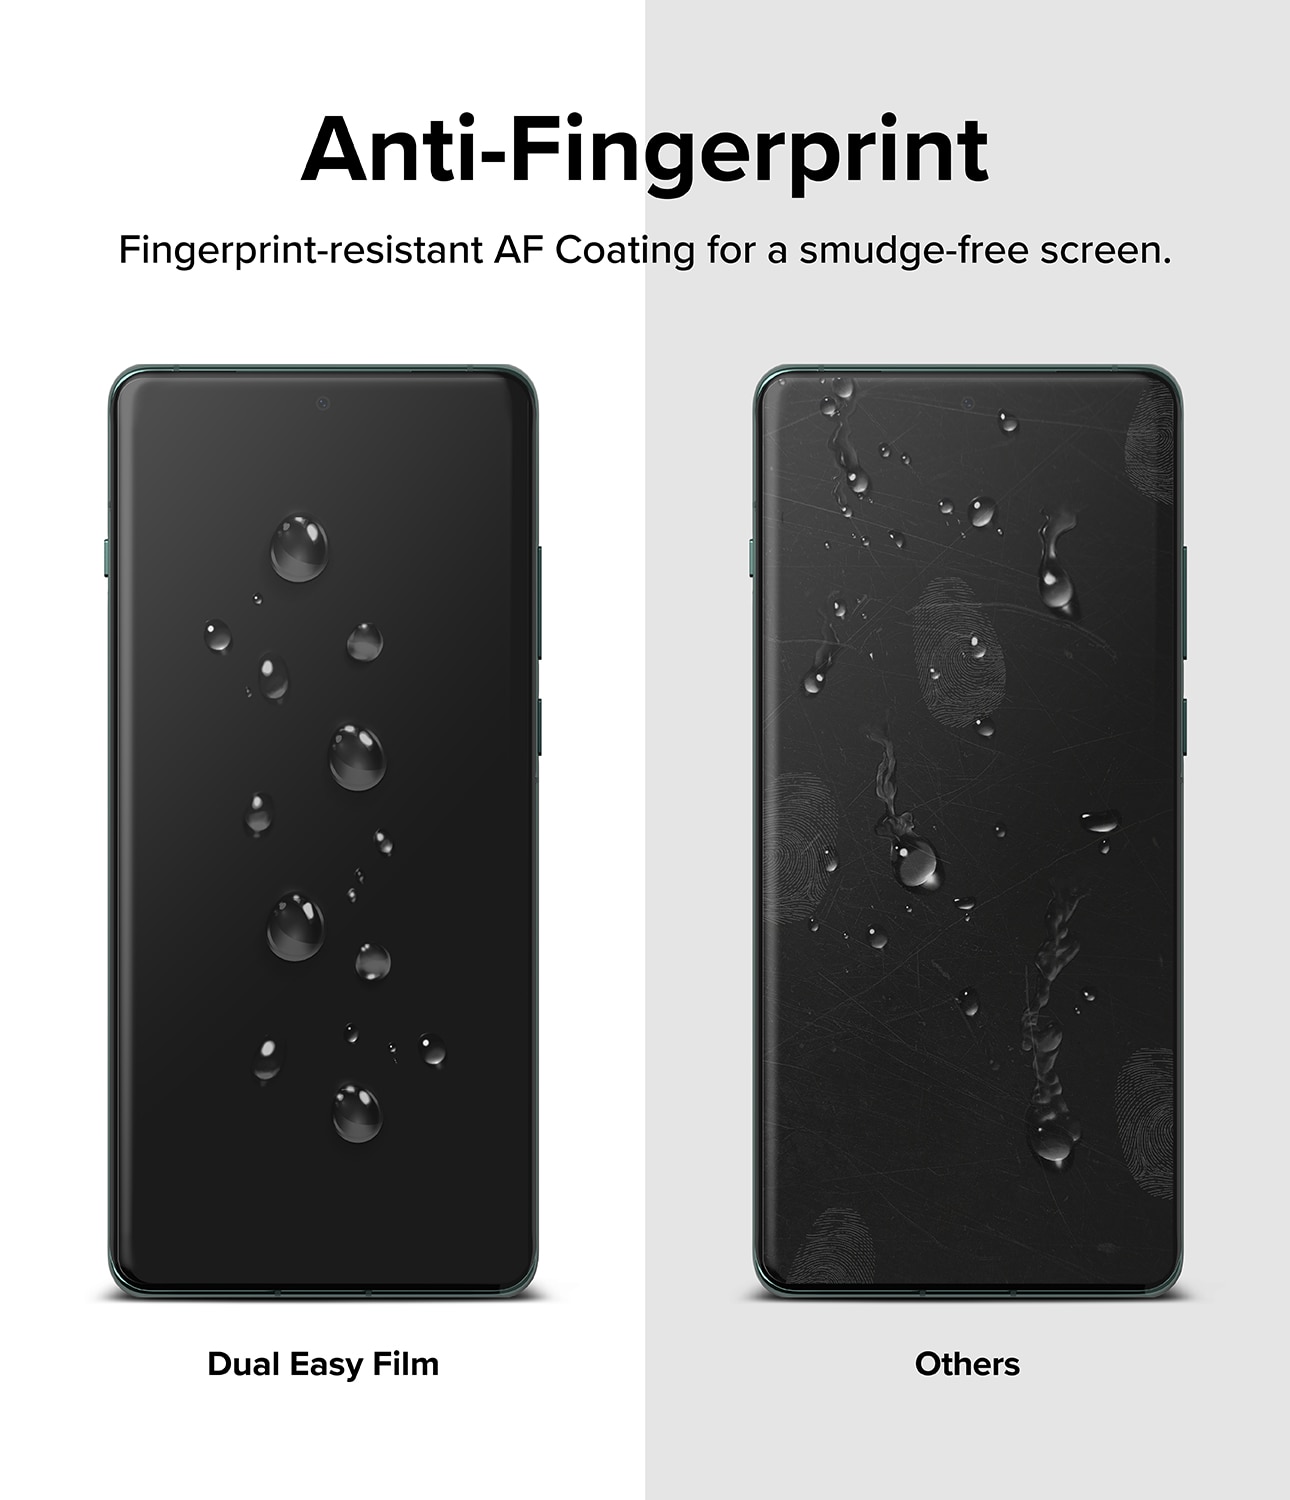 Dual Easy Screen Protector (2 Stück) OnePlus 12